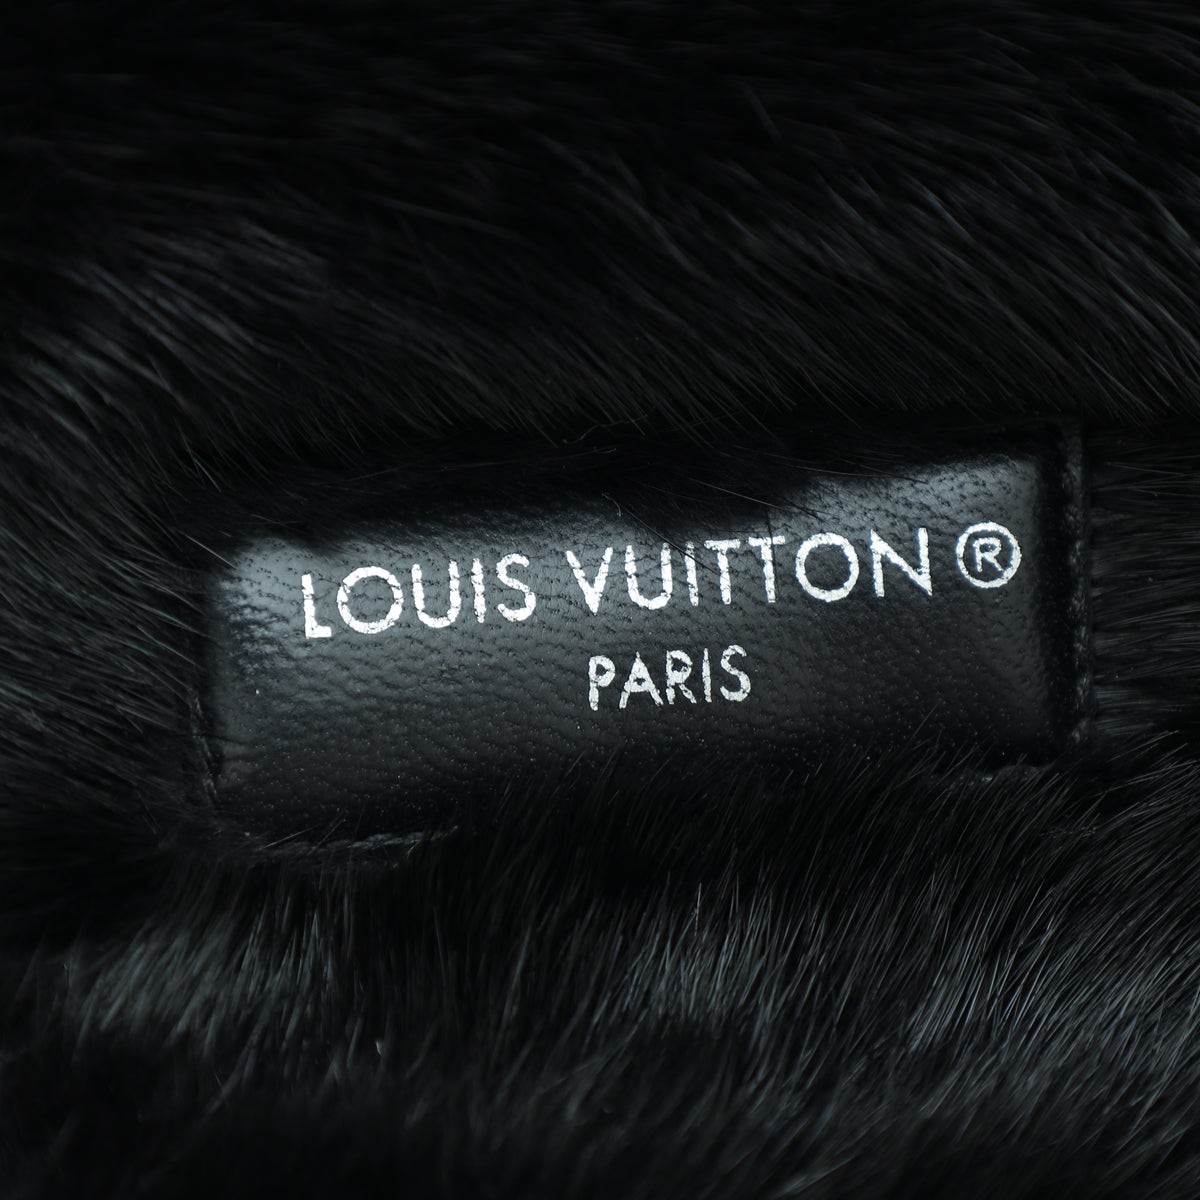 Pool pillow cloth mules Louis Vuitton Blue size 38 EU in Fabric